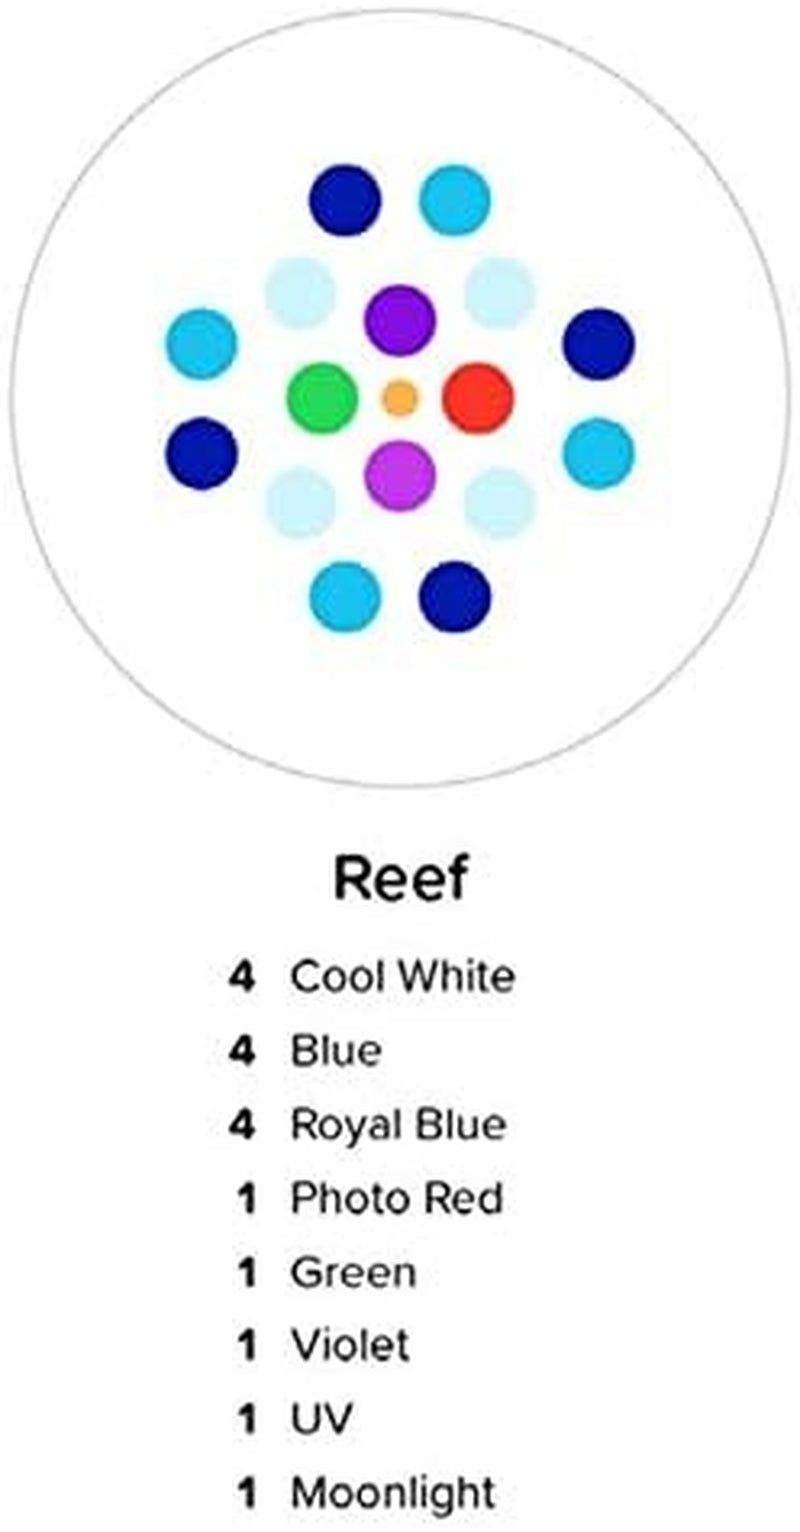 43119102: Aqua Illumination Prime Hd Reef Led Light Fixture, White, 60W